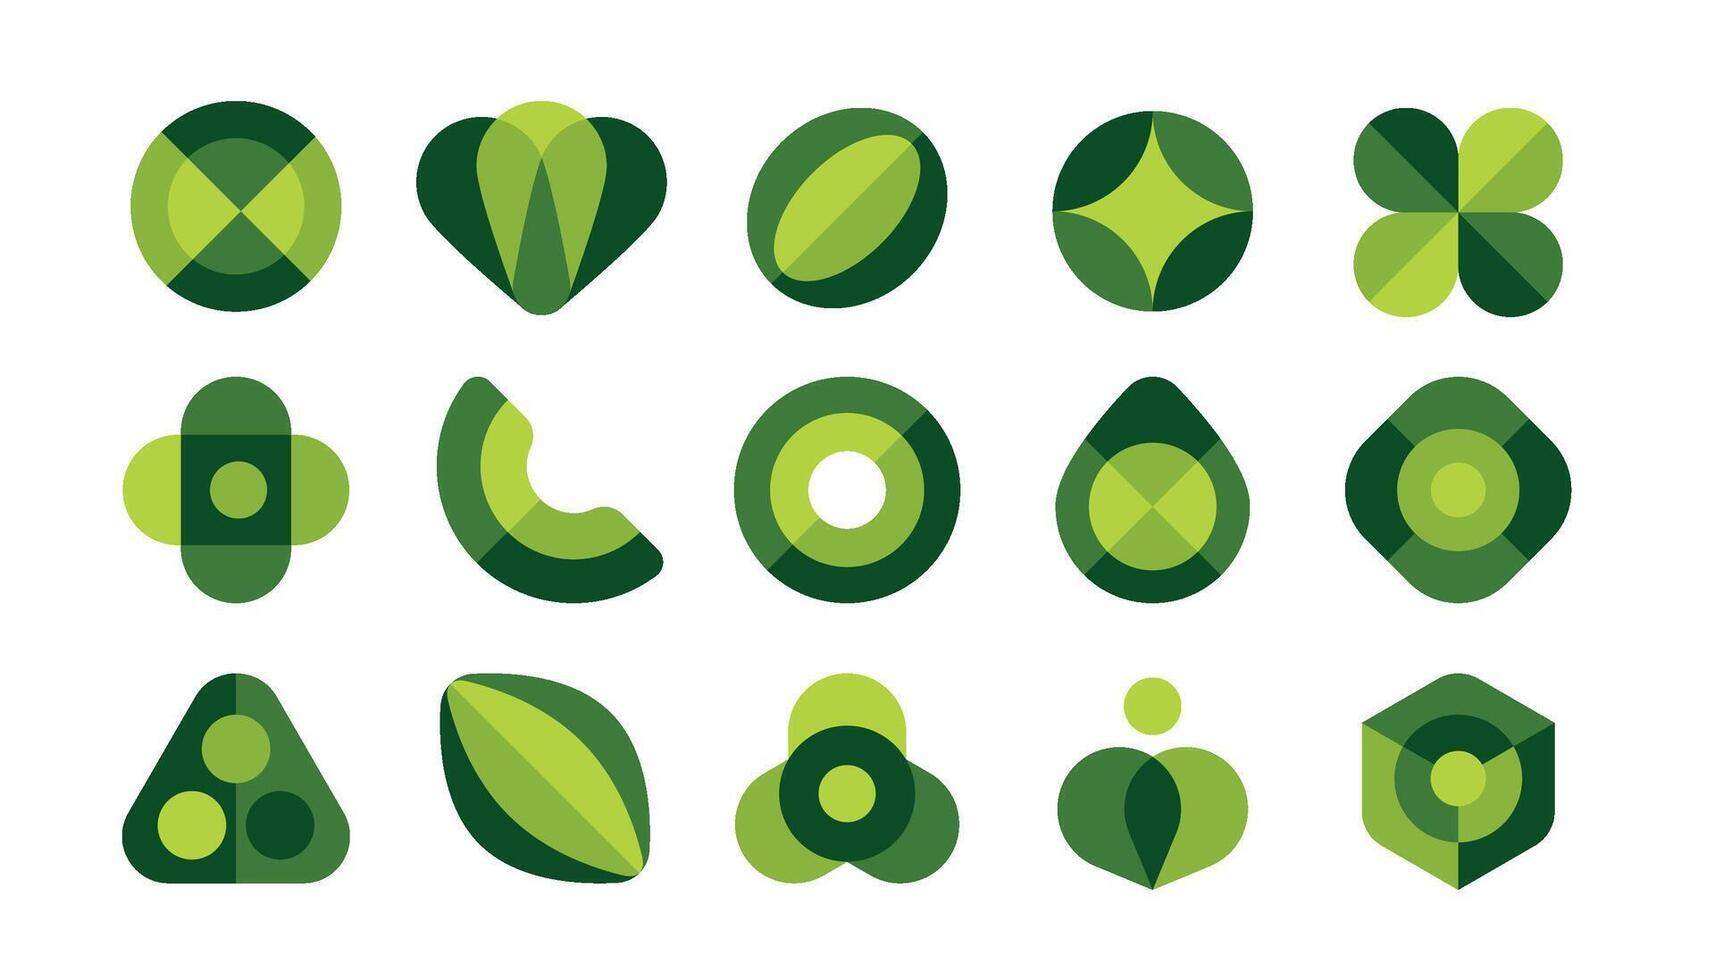 minimalista logotipo formas. abstrato verde geométrico elementos, saudável fresco Comida e orgânico produtos. vetor isolado conjunto